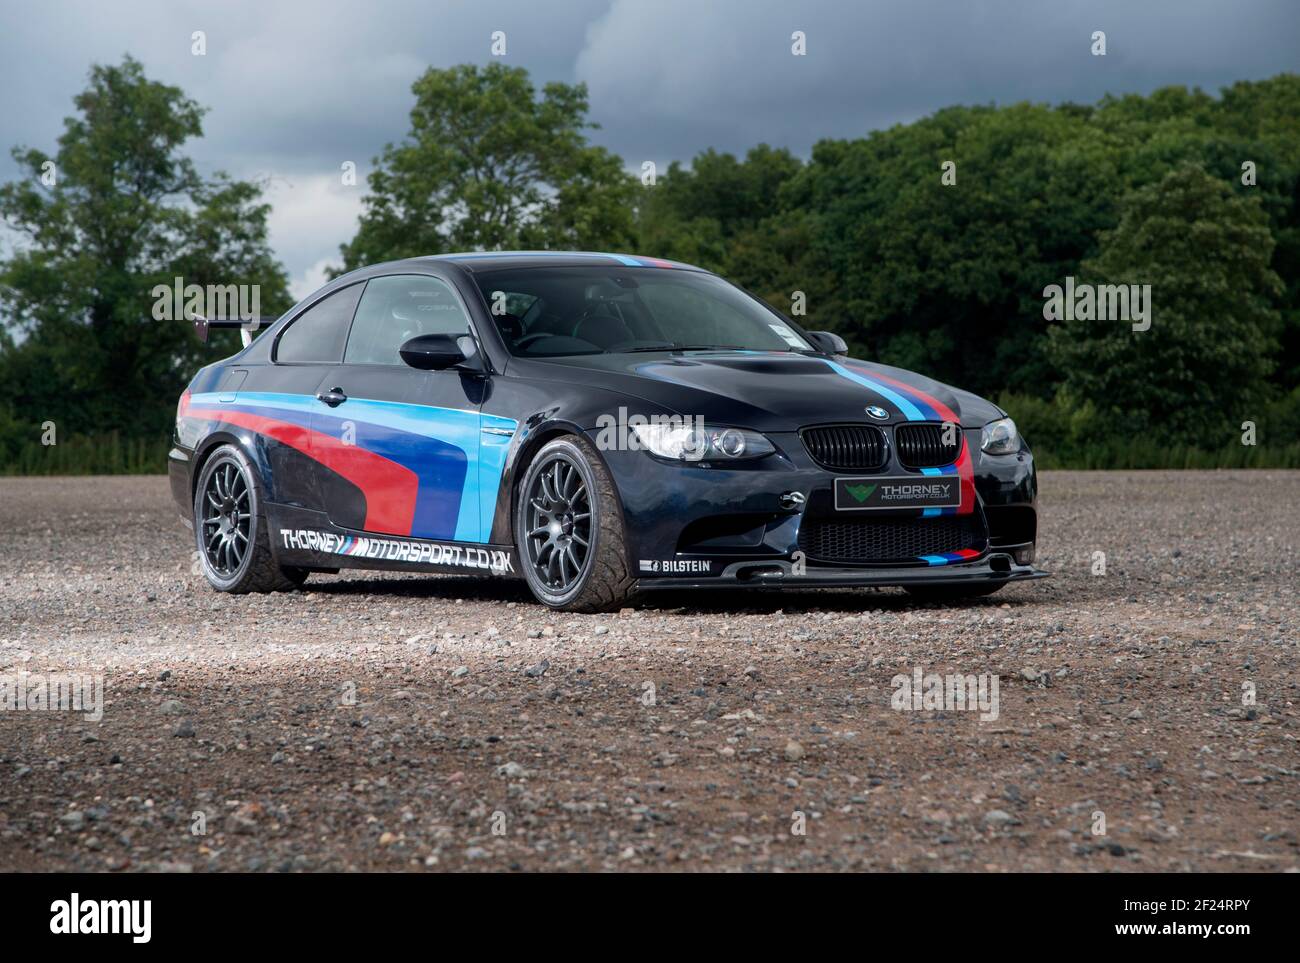 BMW E92 shape M3 high performance coupe Stock Photo - Alamy